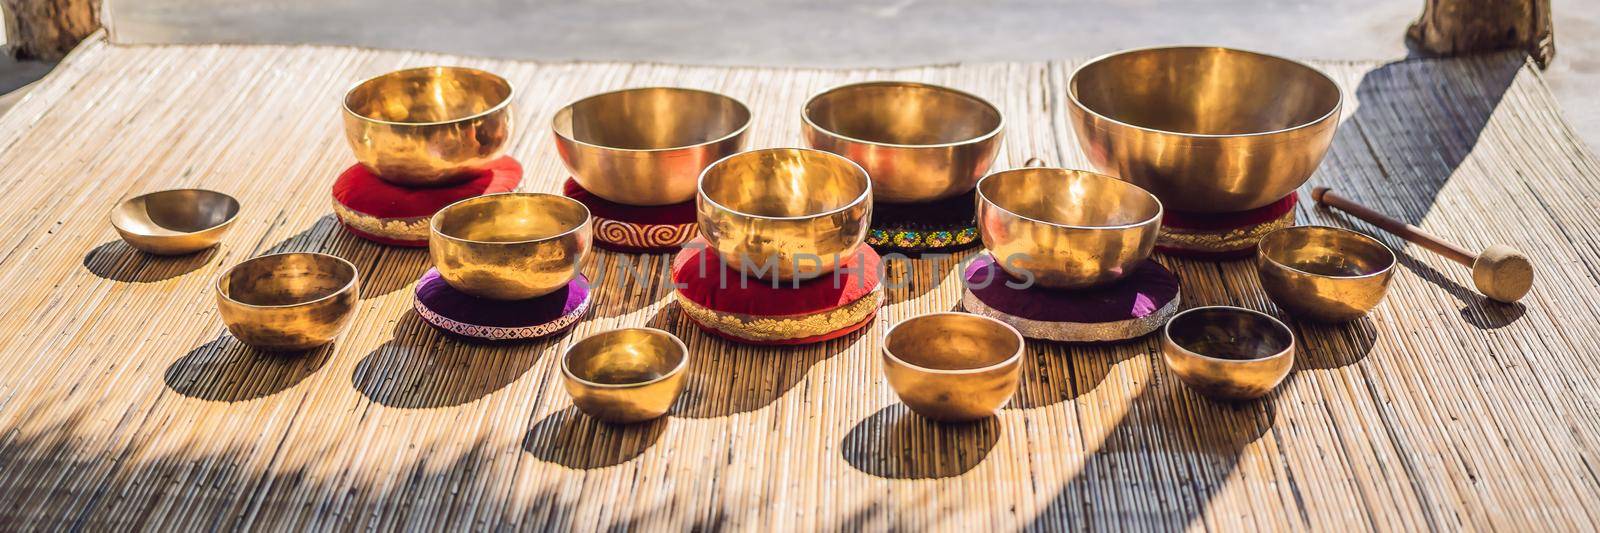 Tibetan singing bowls on a straw mat against a waterfall BANNER, LONG FORMAT by galitskaya